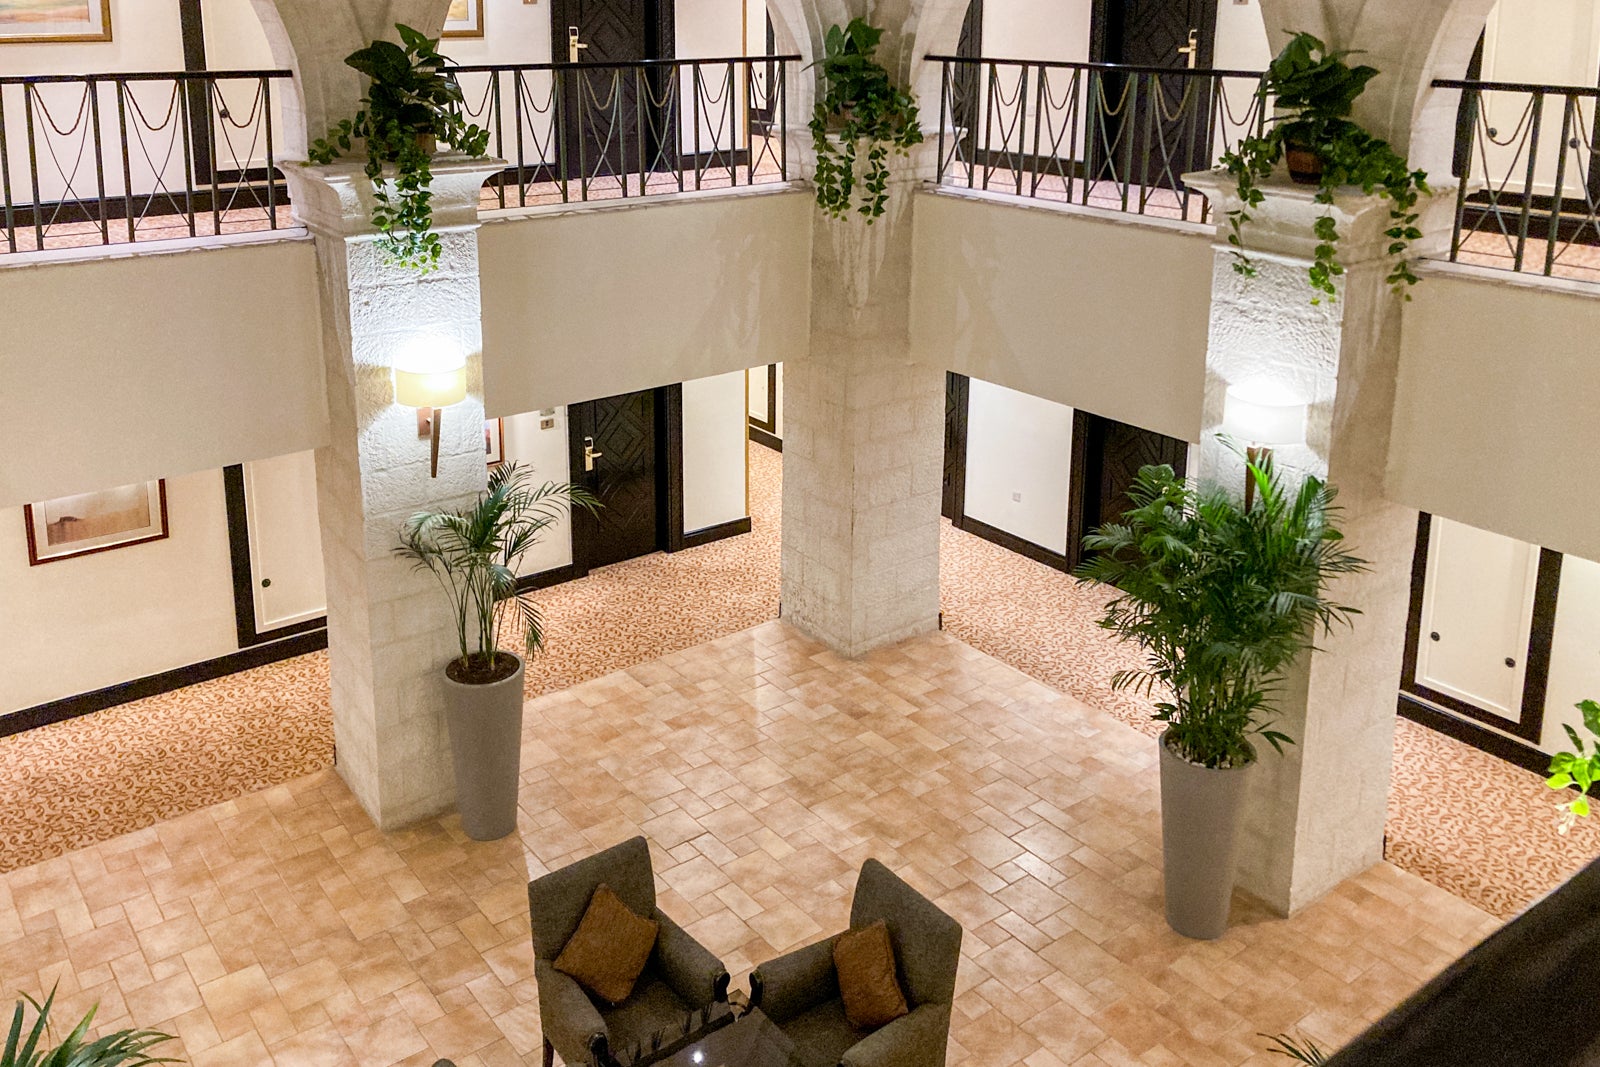 a large, open courtyard inside a hotel